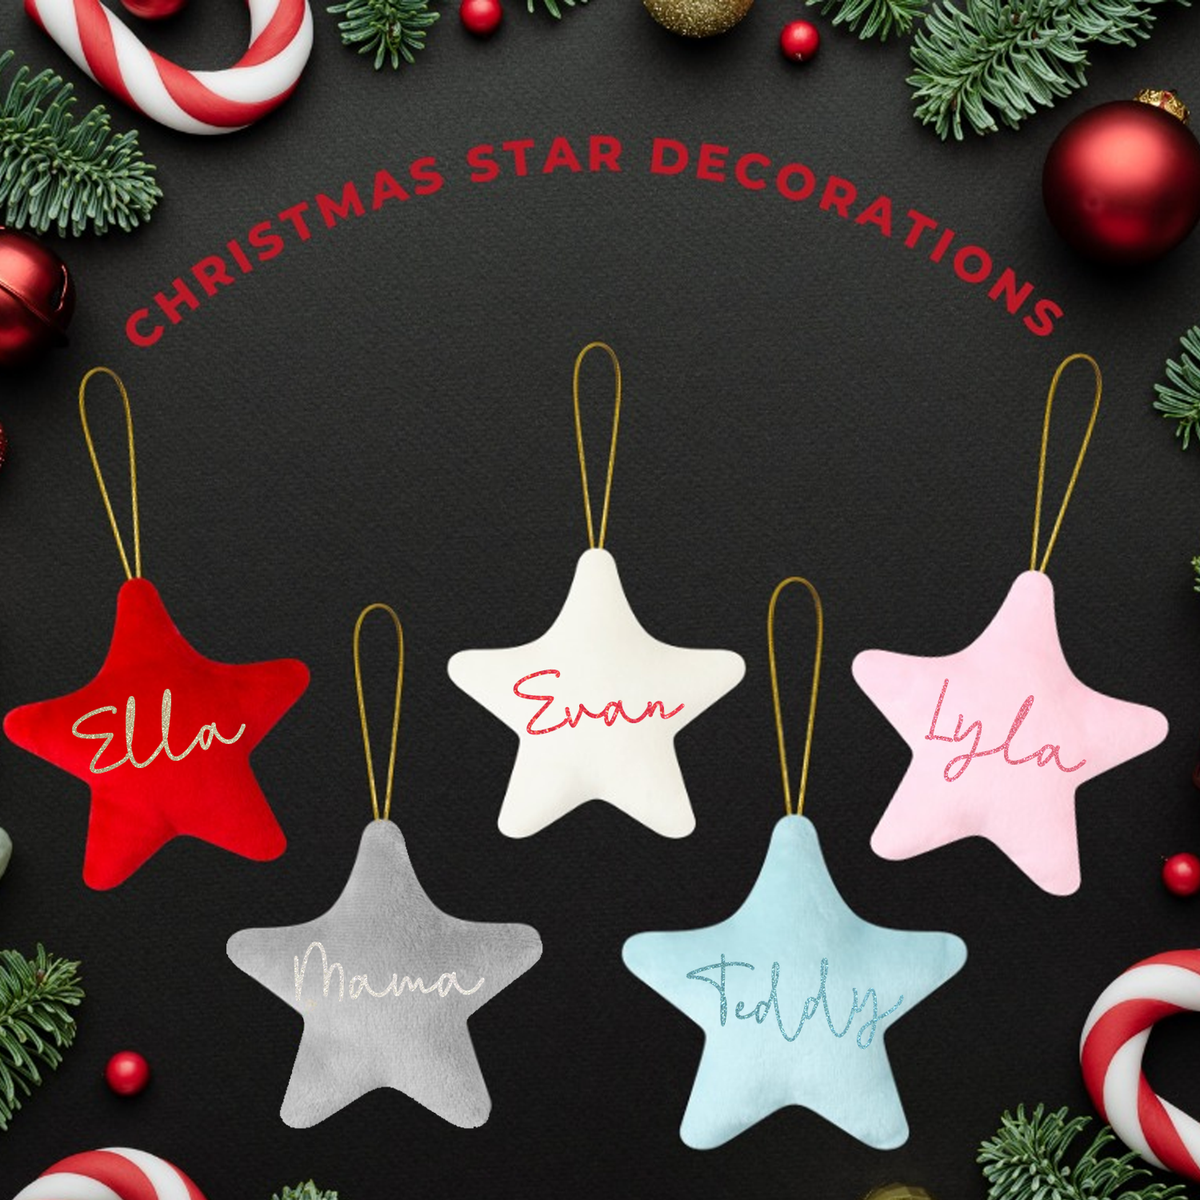 Personalised Hanging Star Decorations - Christmas Tree Decor